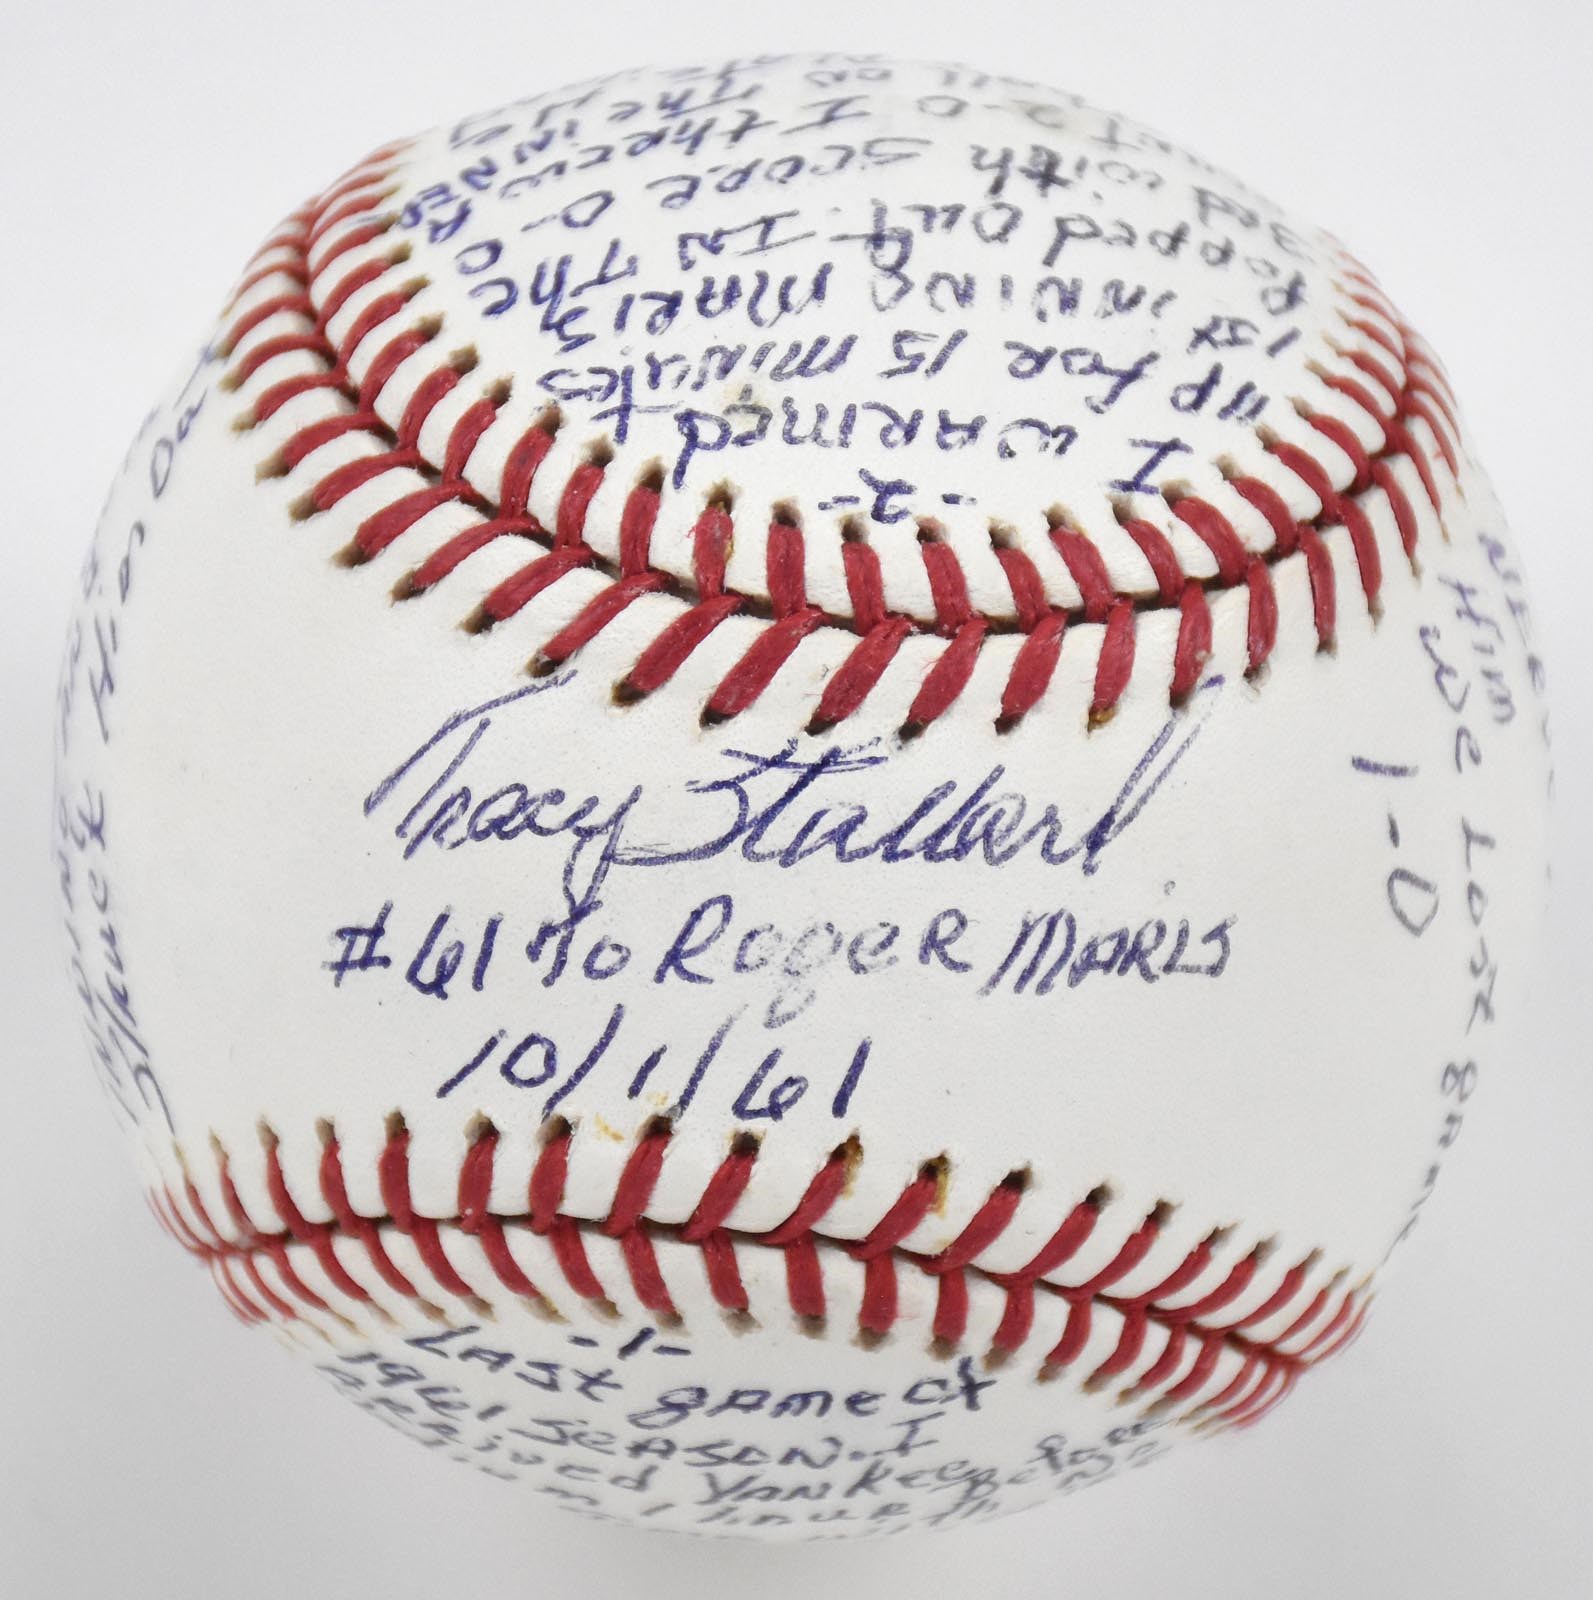 Roger Maris - Roger Maris's 61'st Home Run "Story-Ball" done by Tracy Stallard